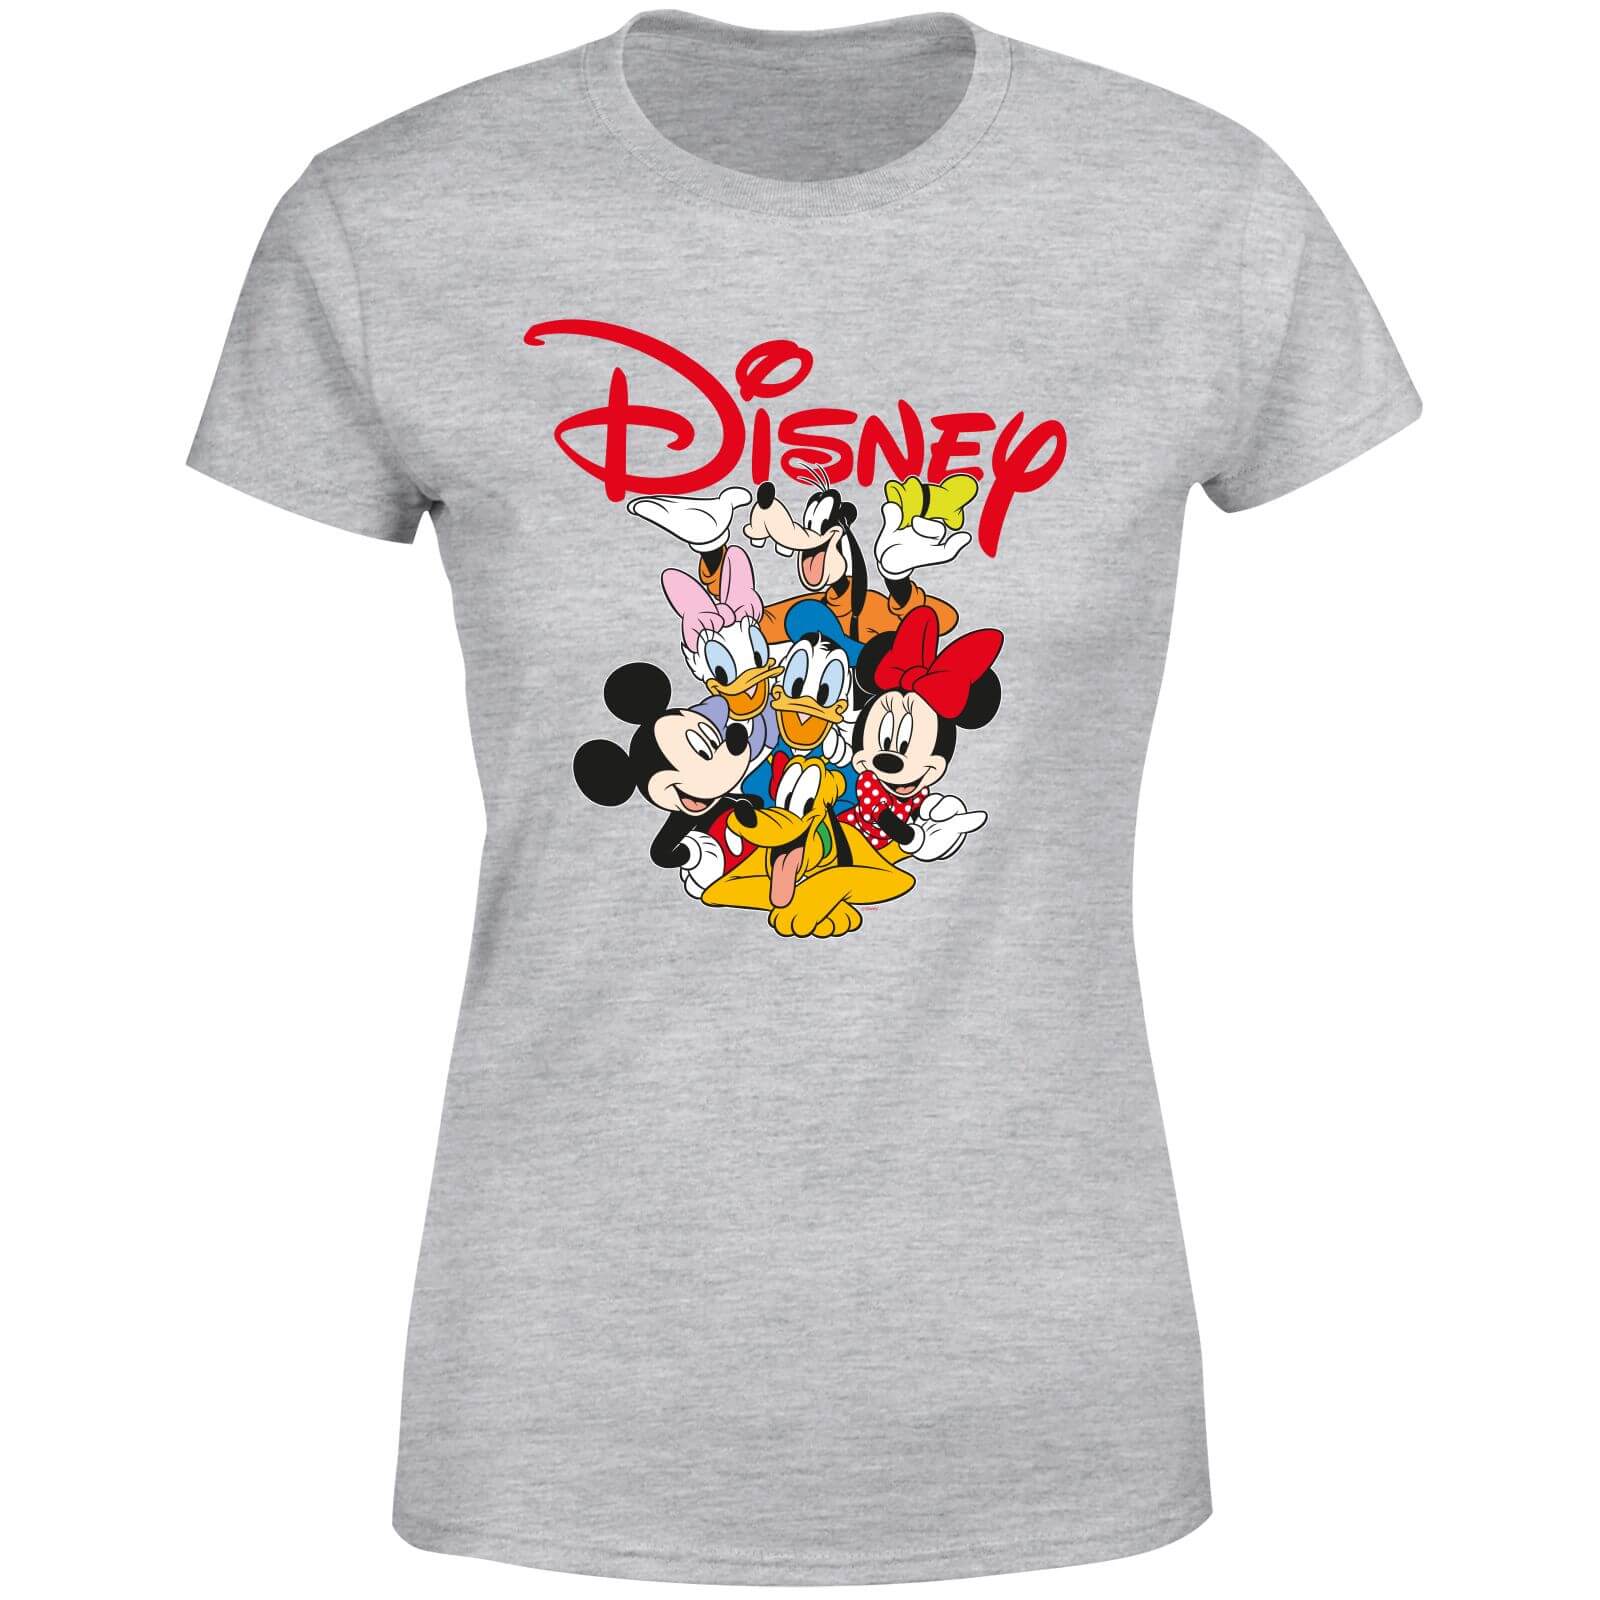 Mickey Mouse Disney Crew Women's T-Shirt - Grey - XS